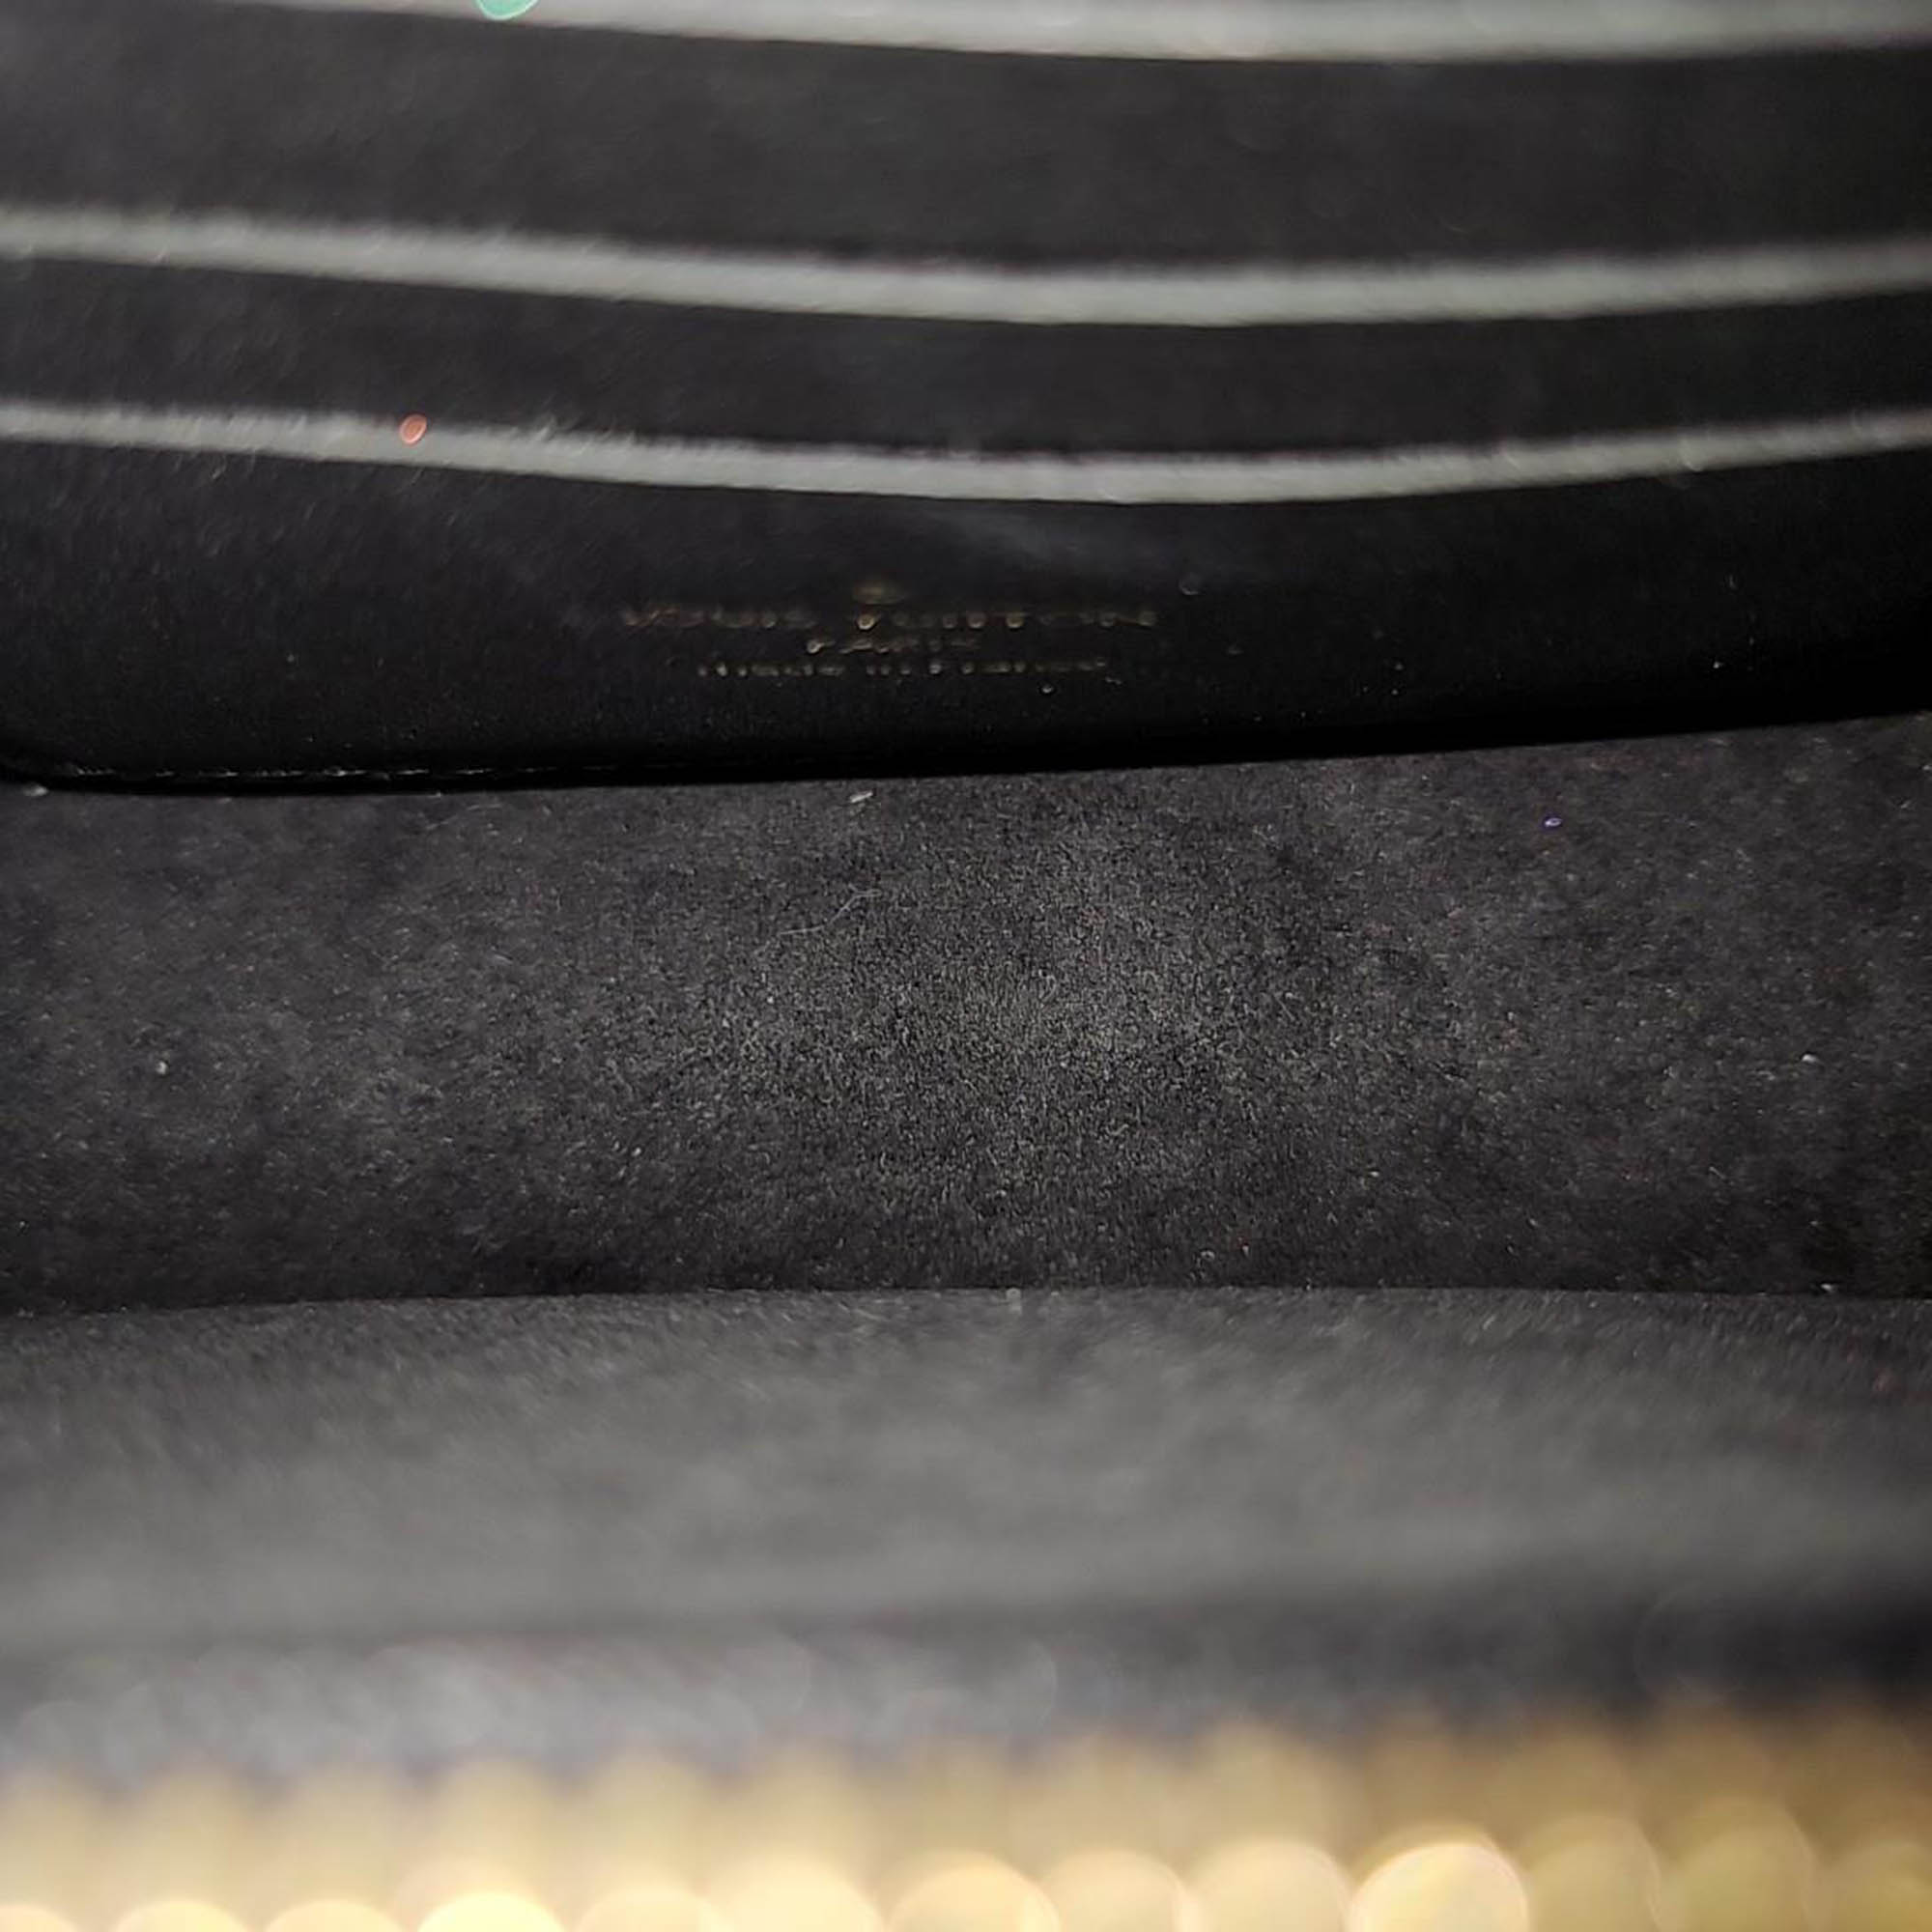 Louis Vuitton Dolphin Chain Wallet Bag